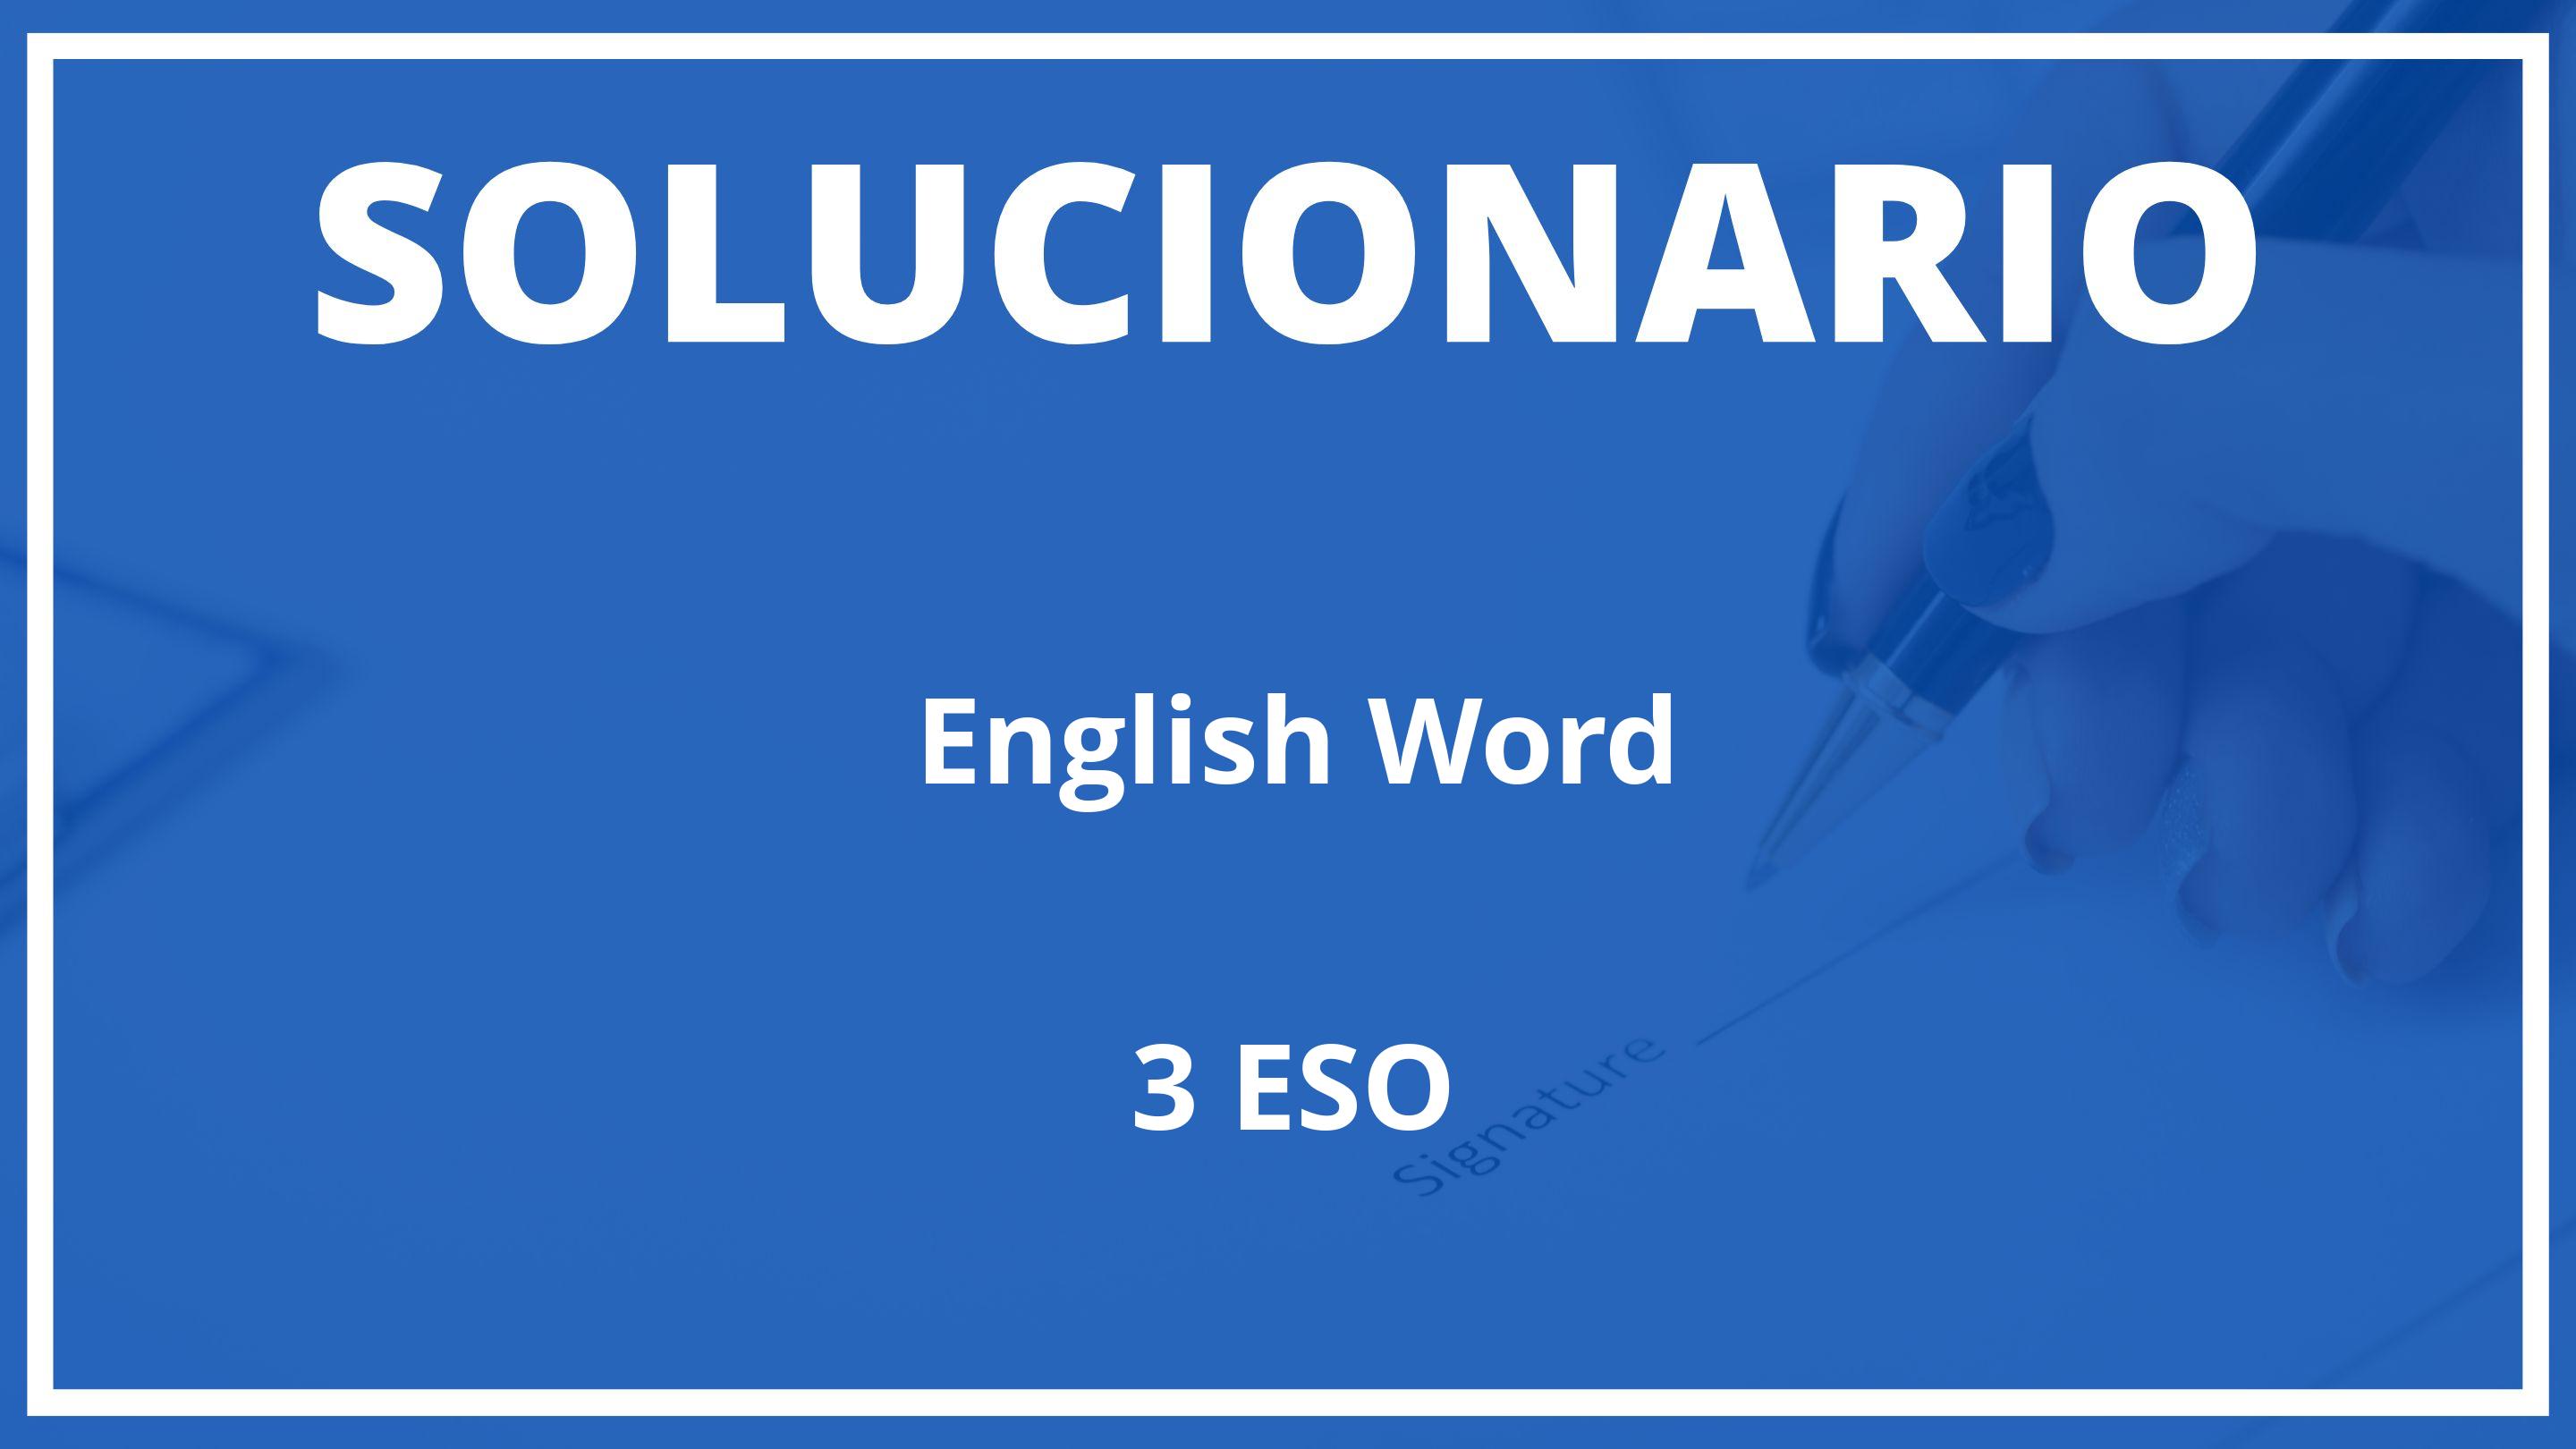 Solucionario English Word Burlington Books 3 ESO